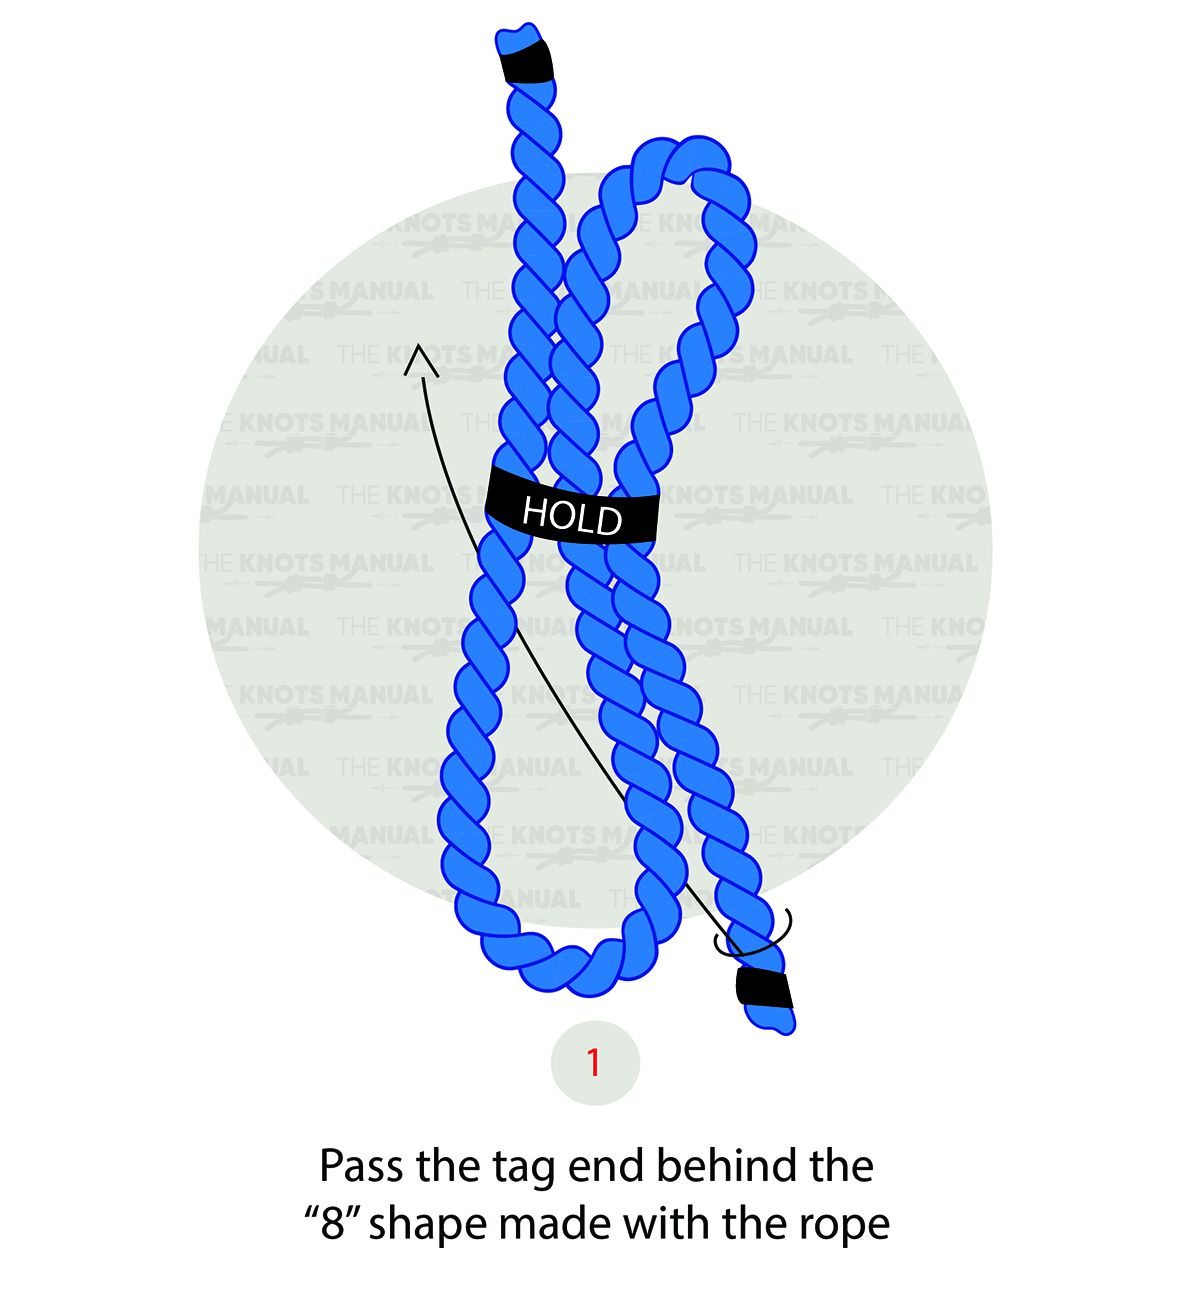 Hangman’s Knot (Noose) Step 1